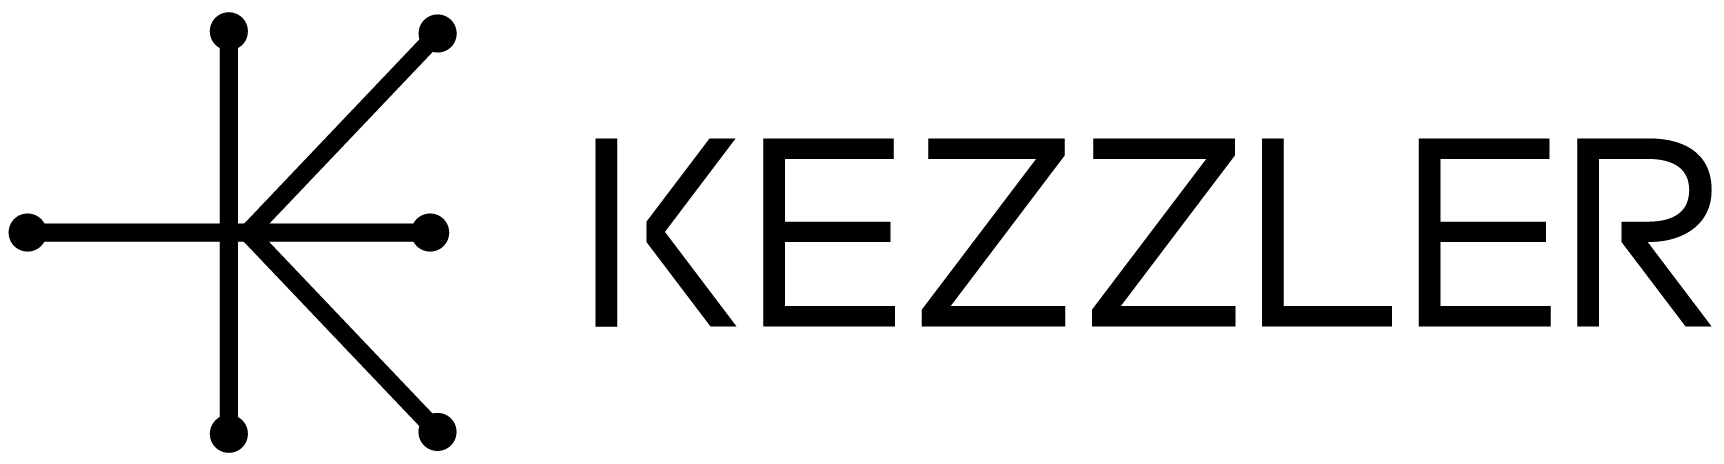 kezzler logo